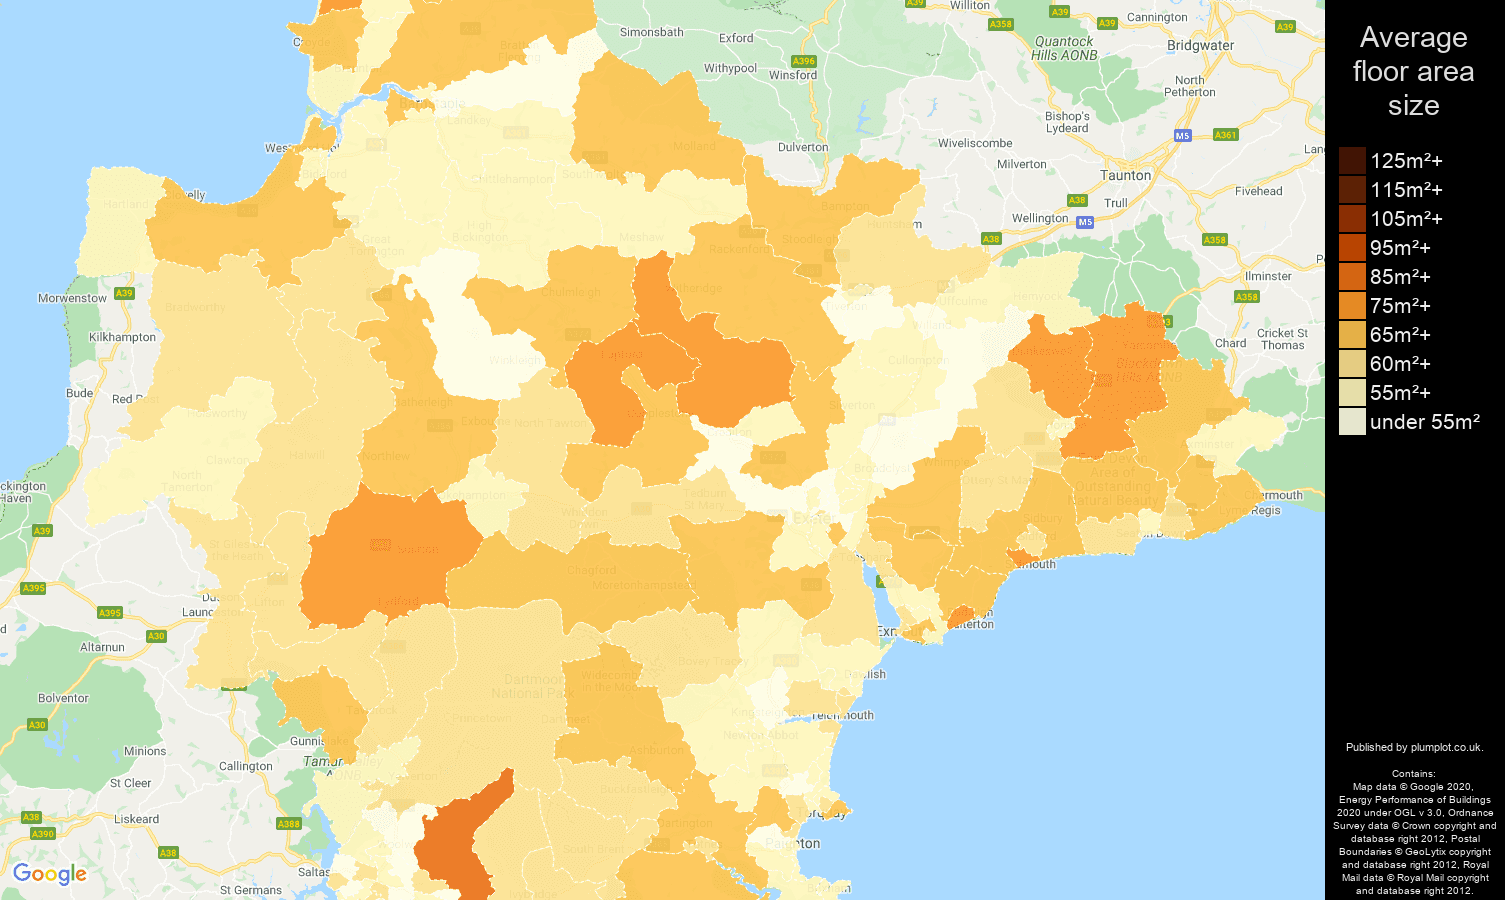 Devon map of average floor area size of flats